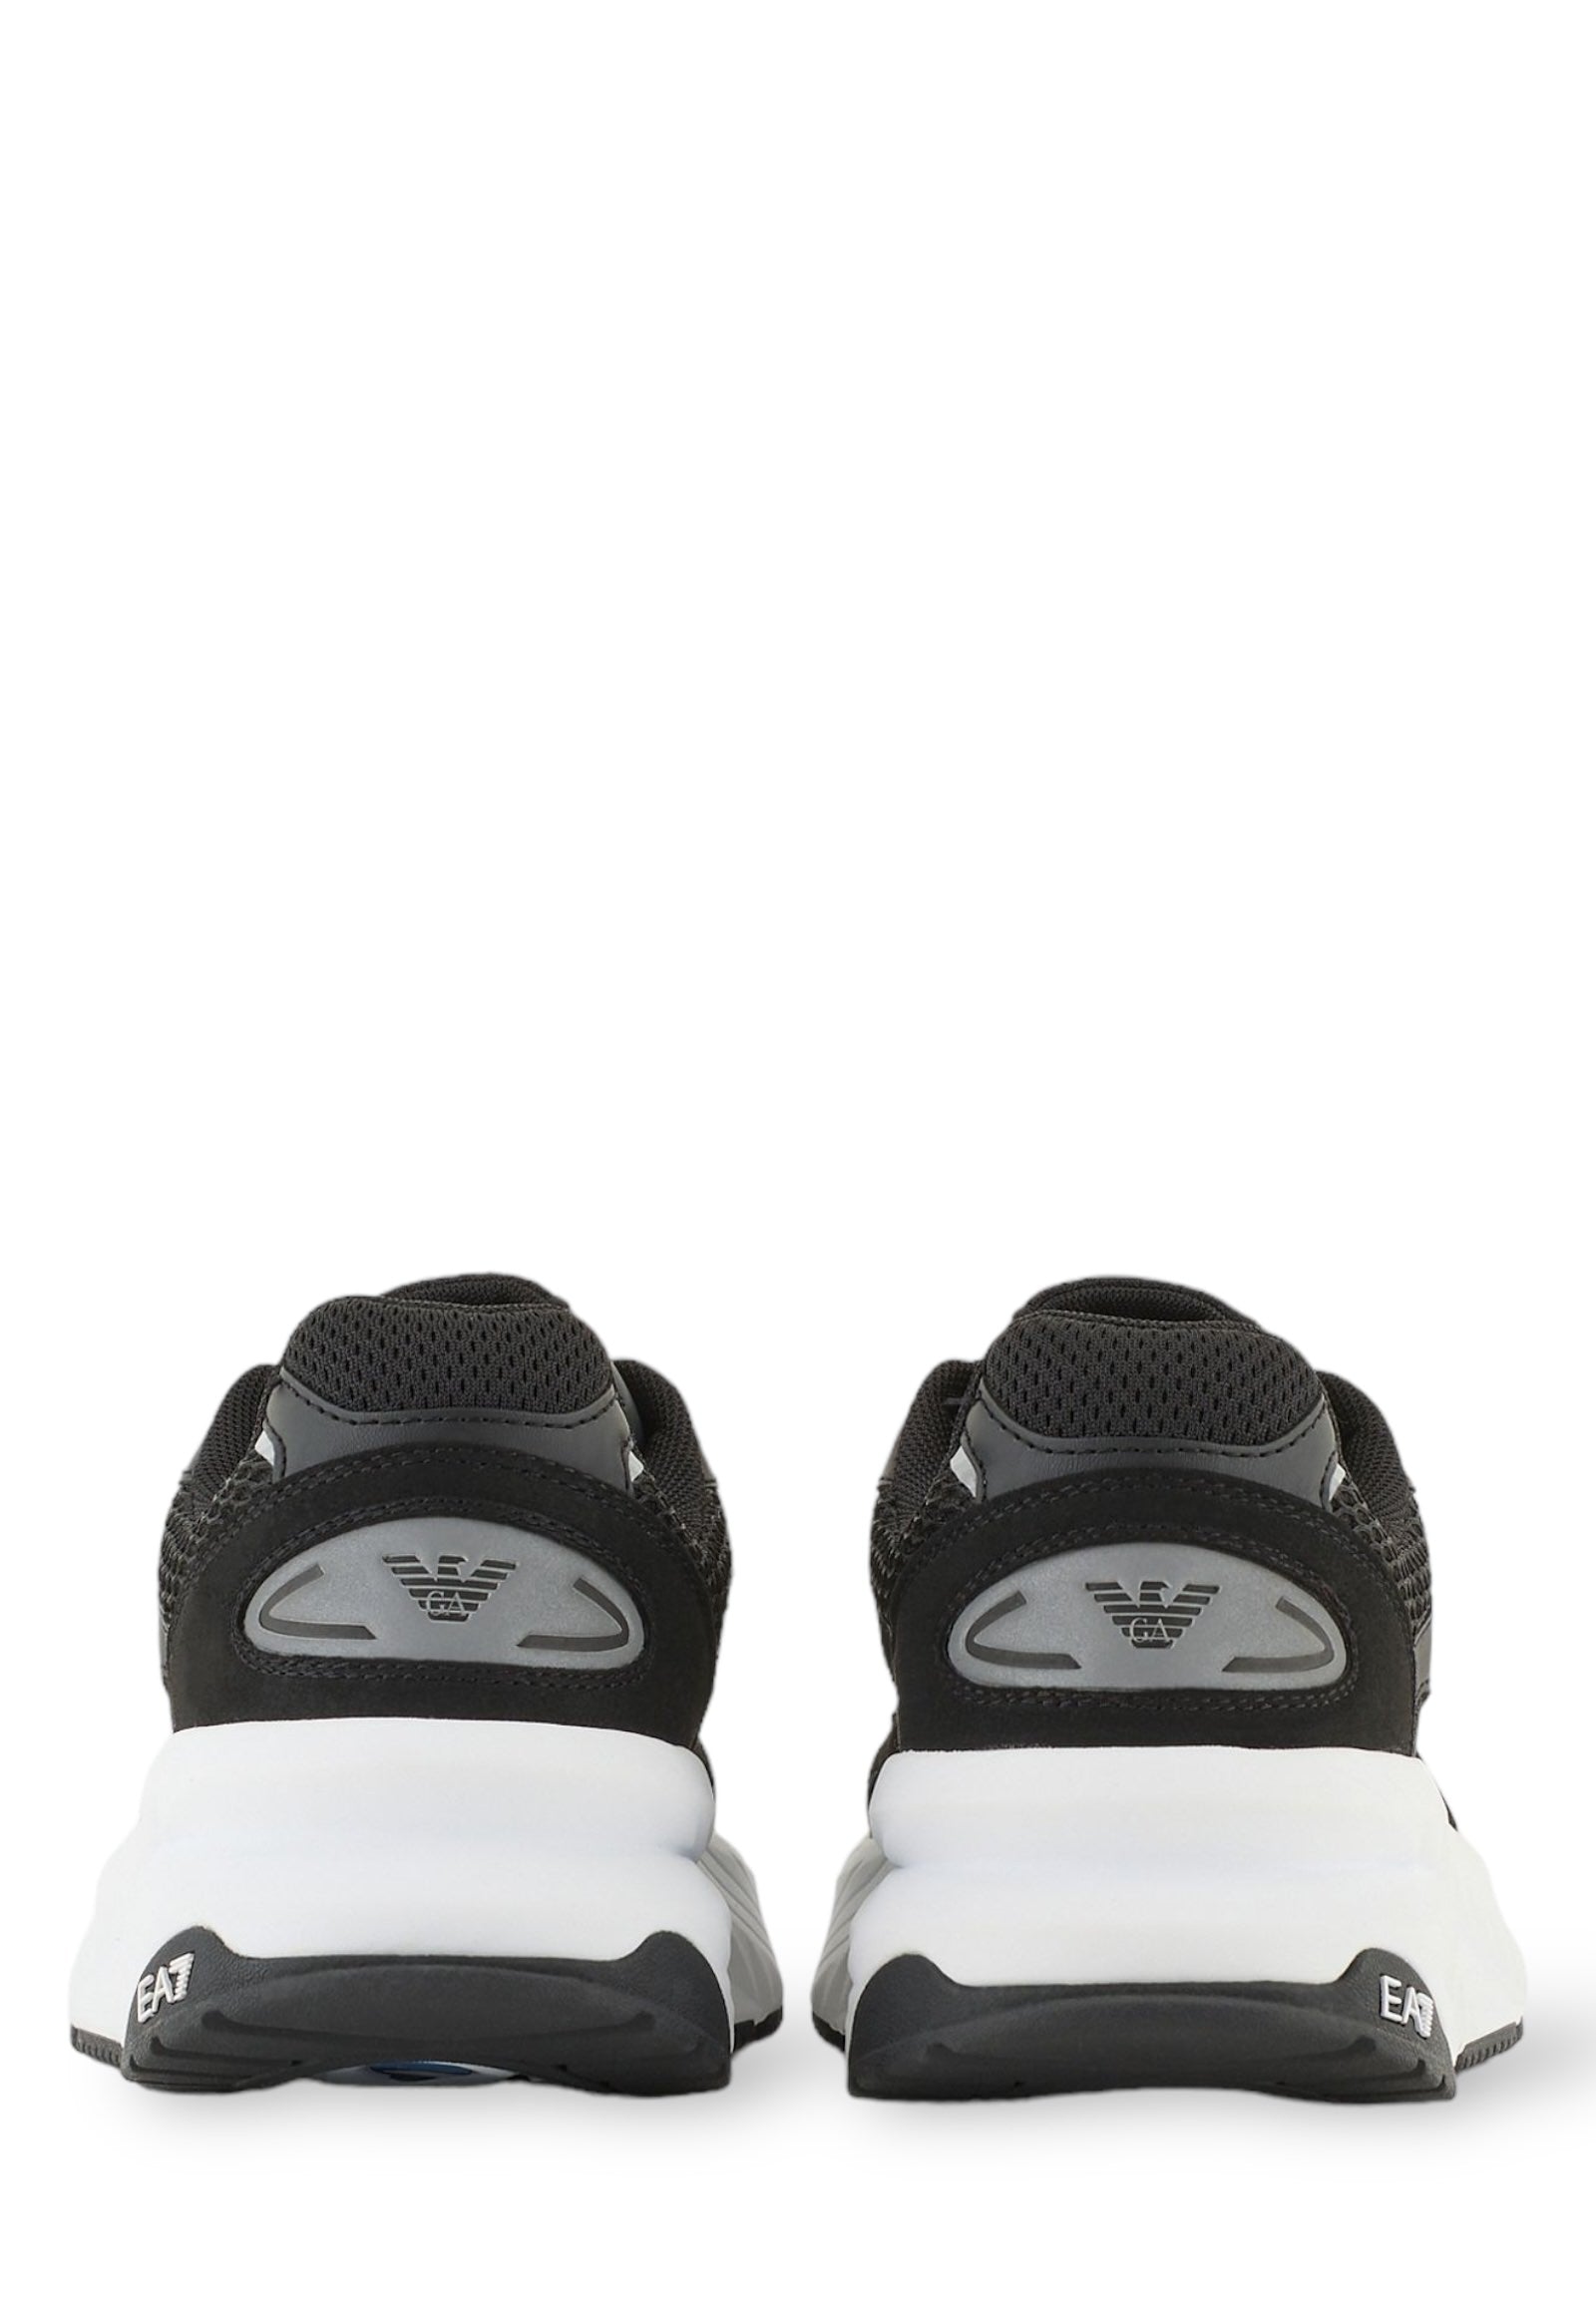 Sneakers X8x178 BlacK-Silver